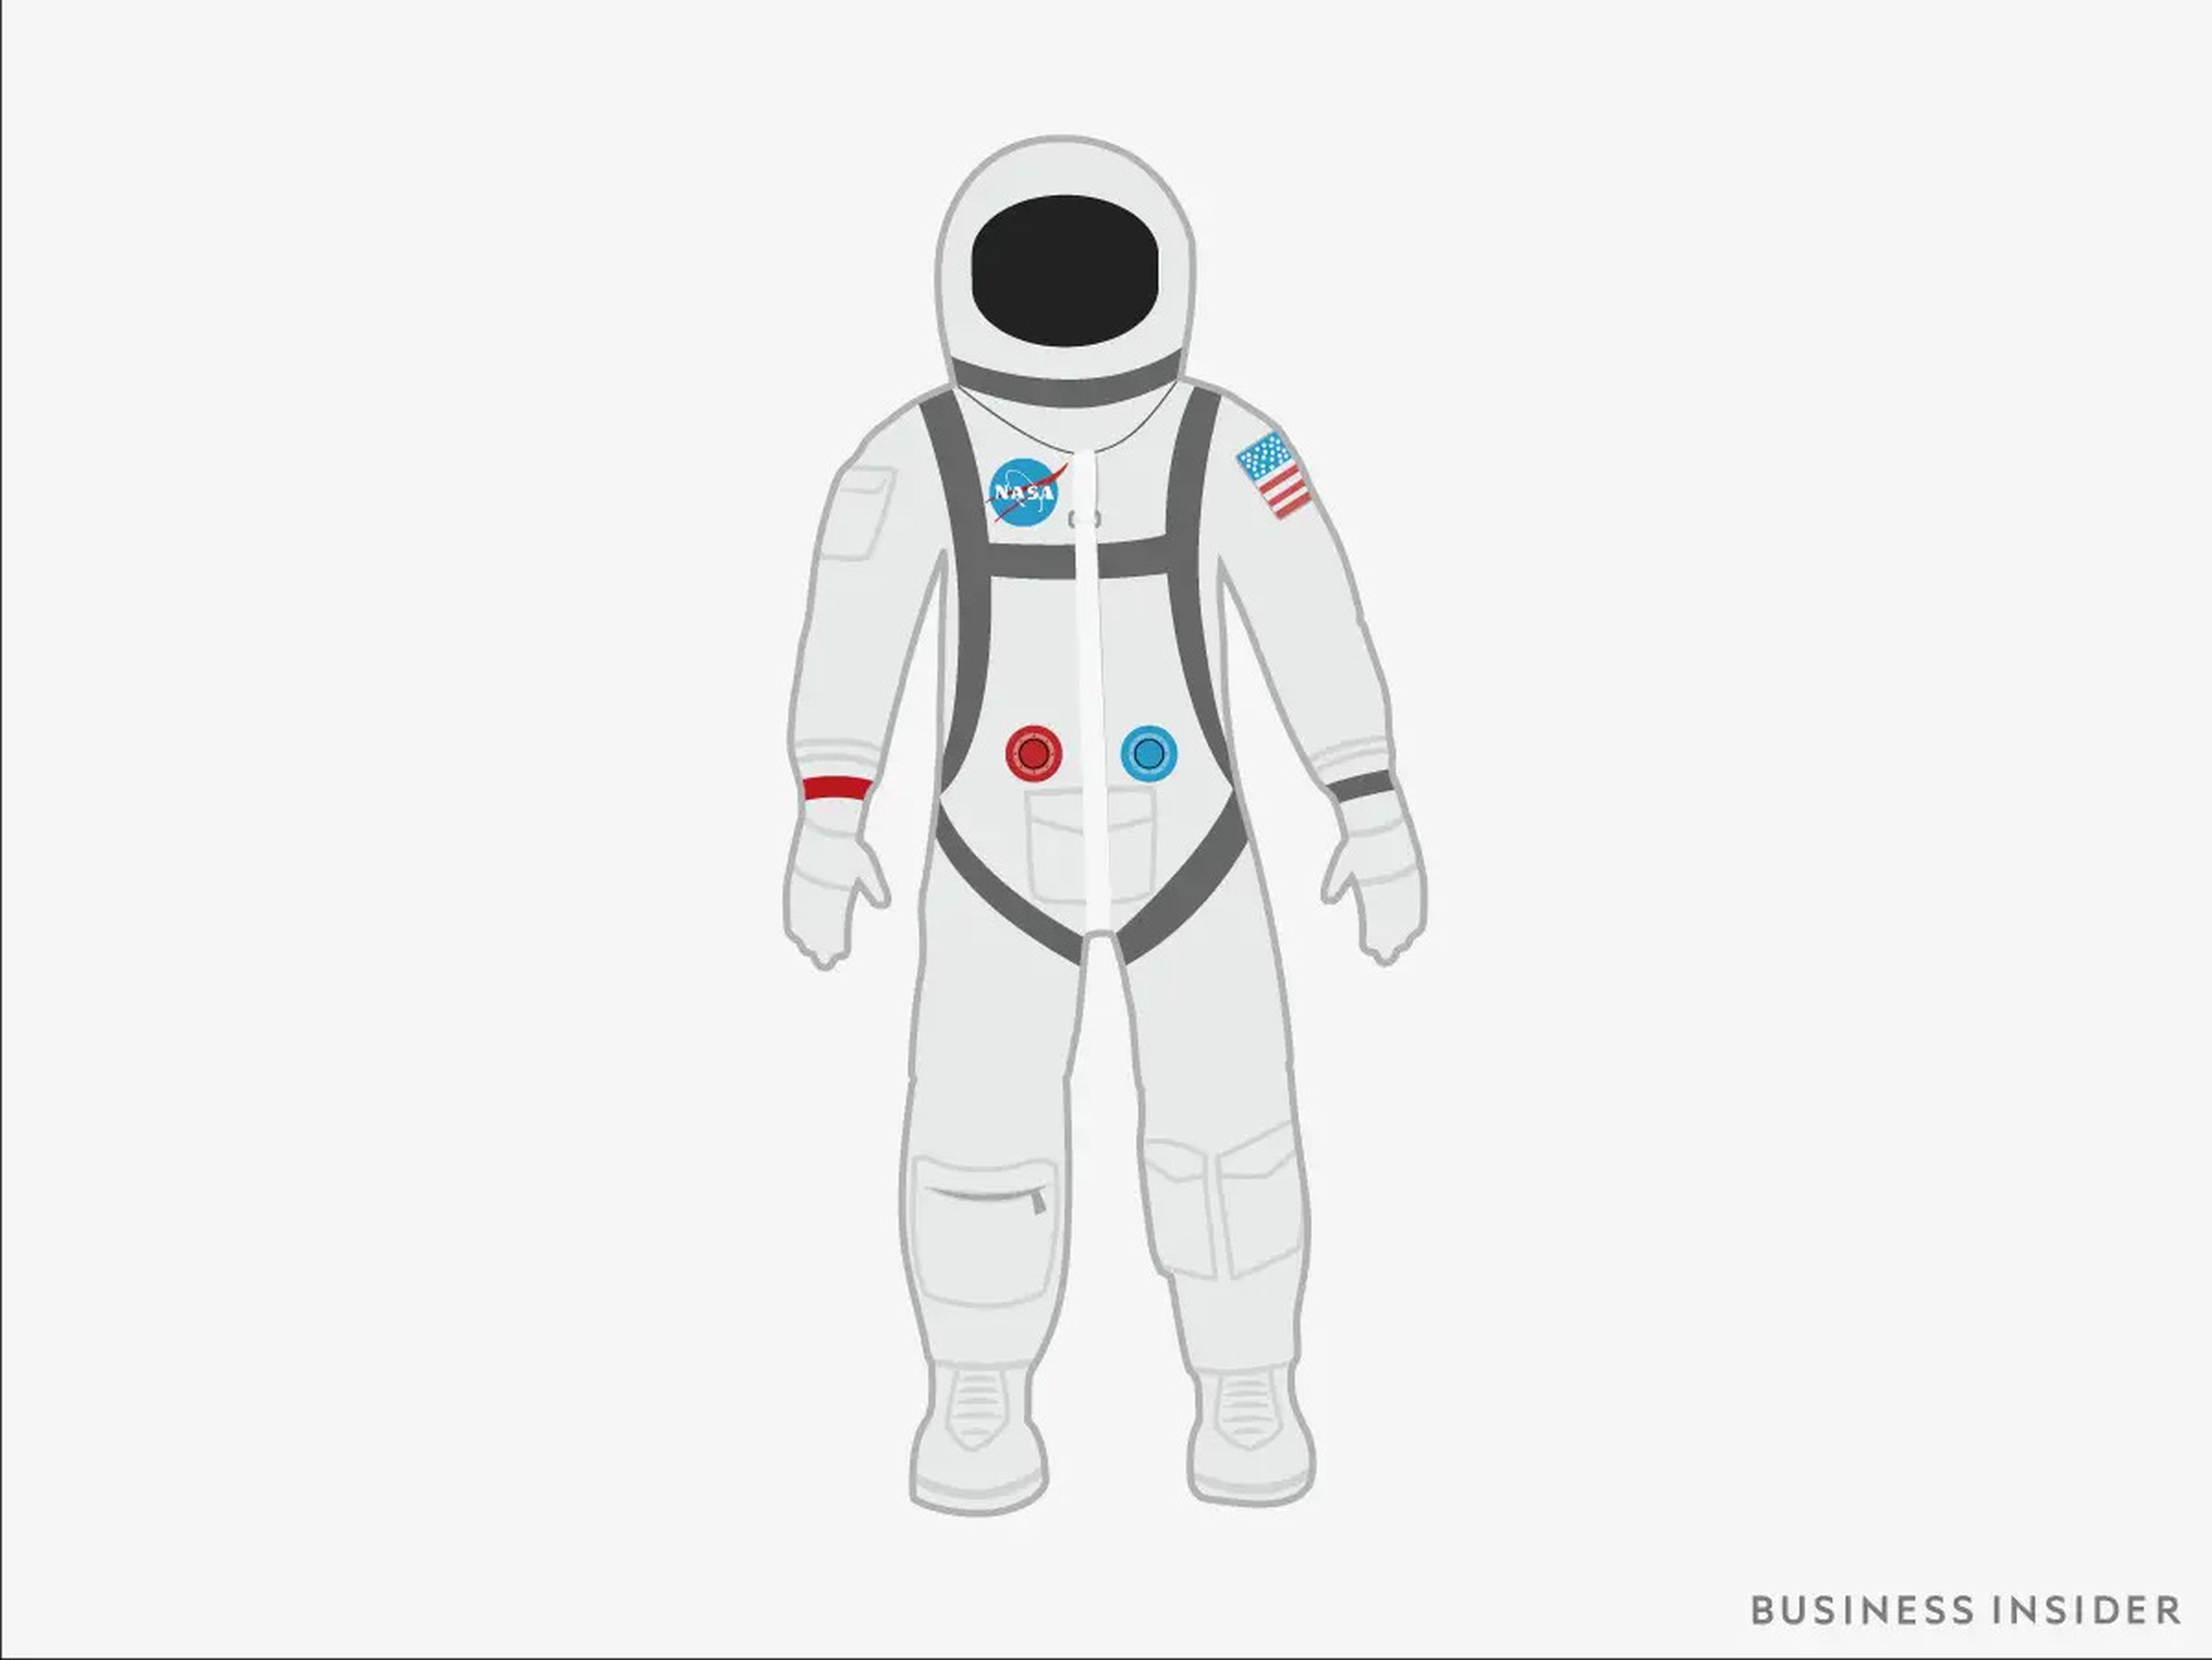 gemini spacewalk suit 1965 1966 nasa spacesuit business insider